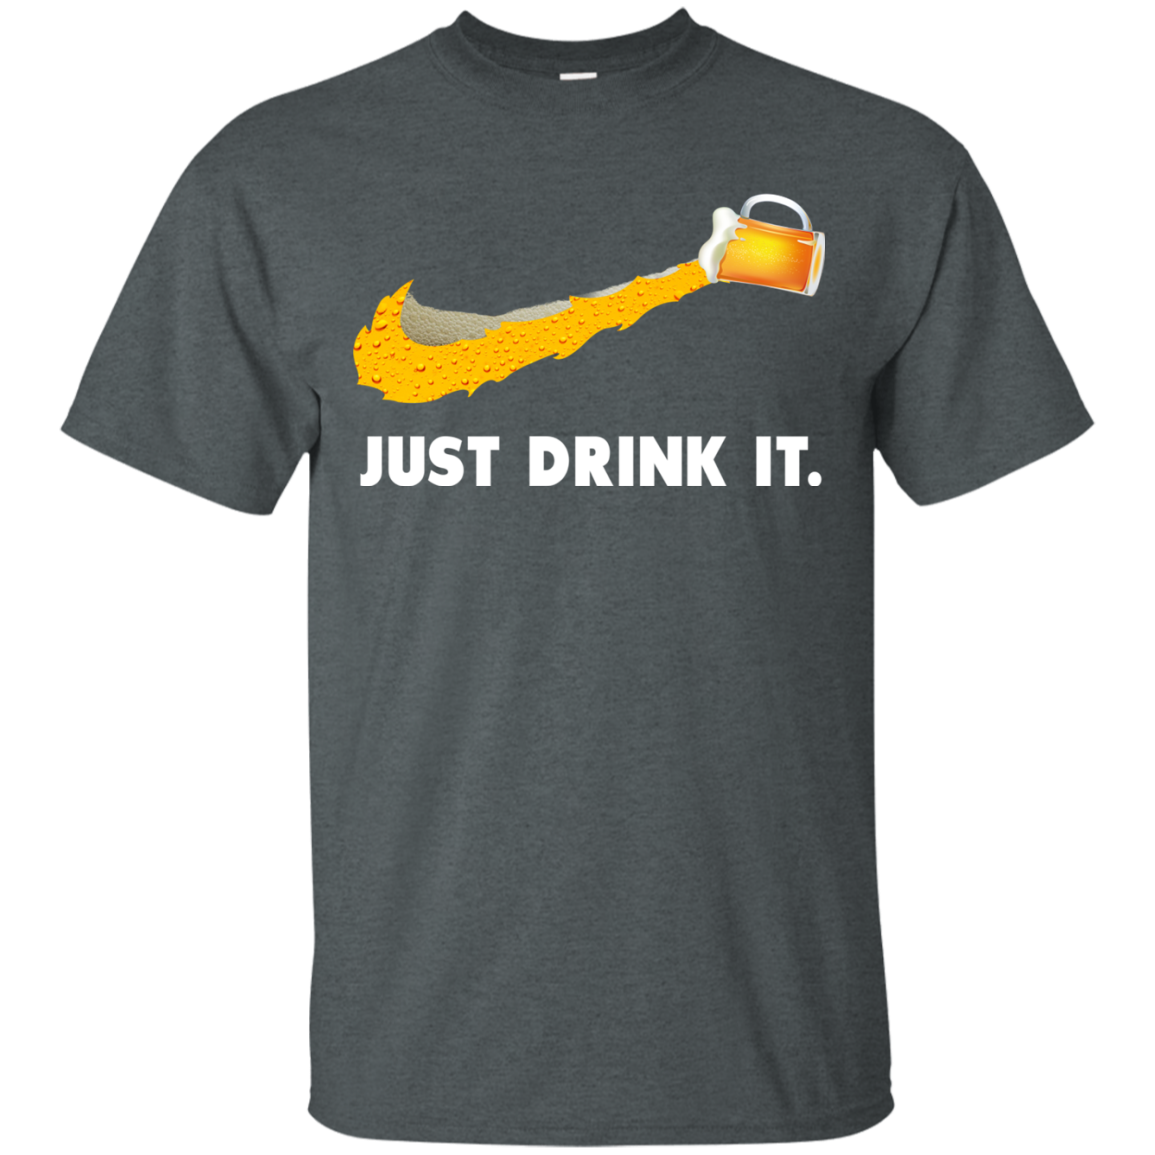 Love Beer: Just Drink It Nike Logo T-Shirts, Hoodies, Tank Top - Funny Nike Logos